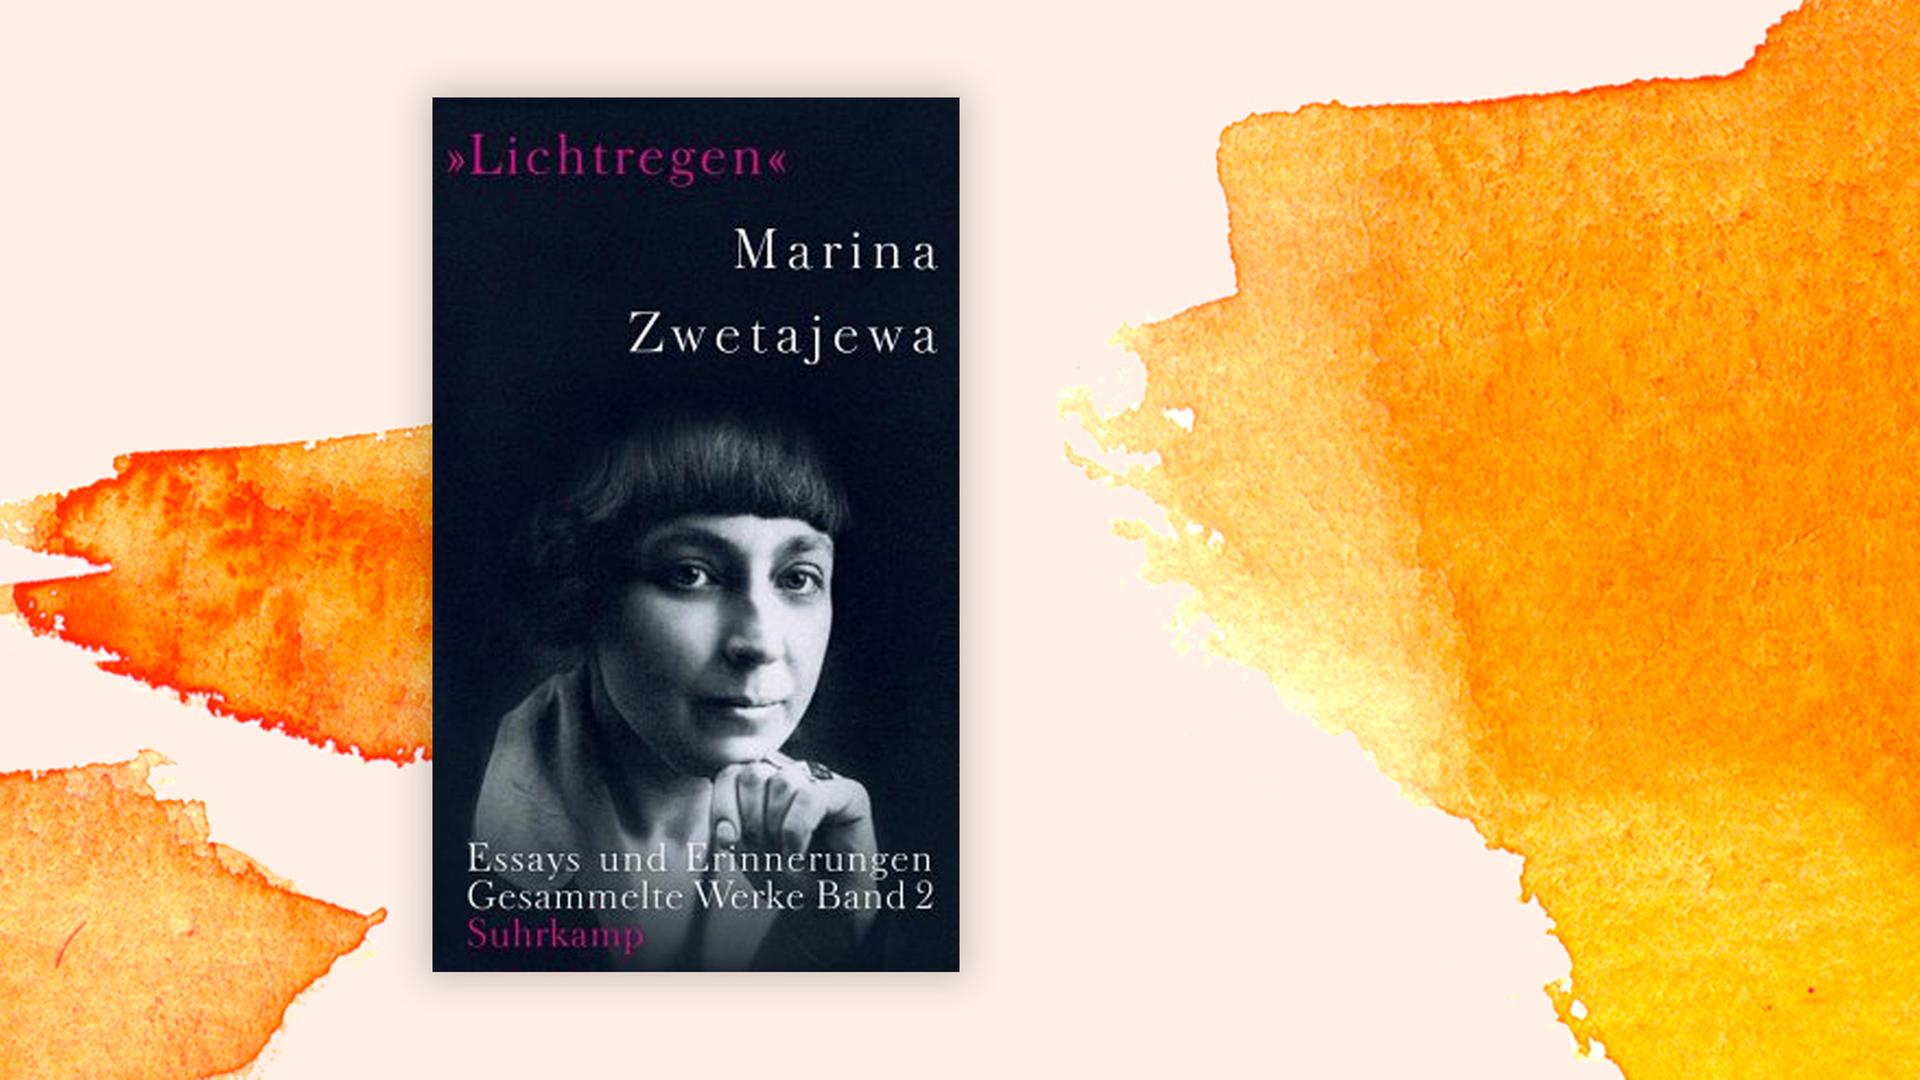 Buchcover: Marina Zwetajewa "Lichtregen"